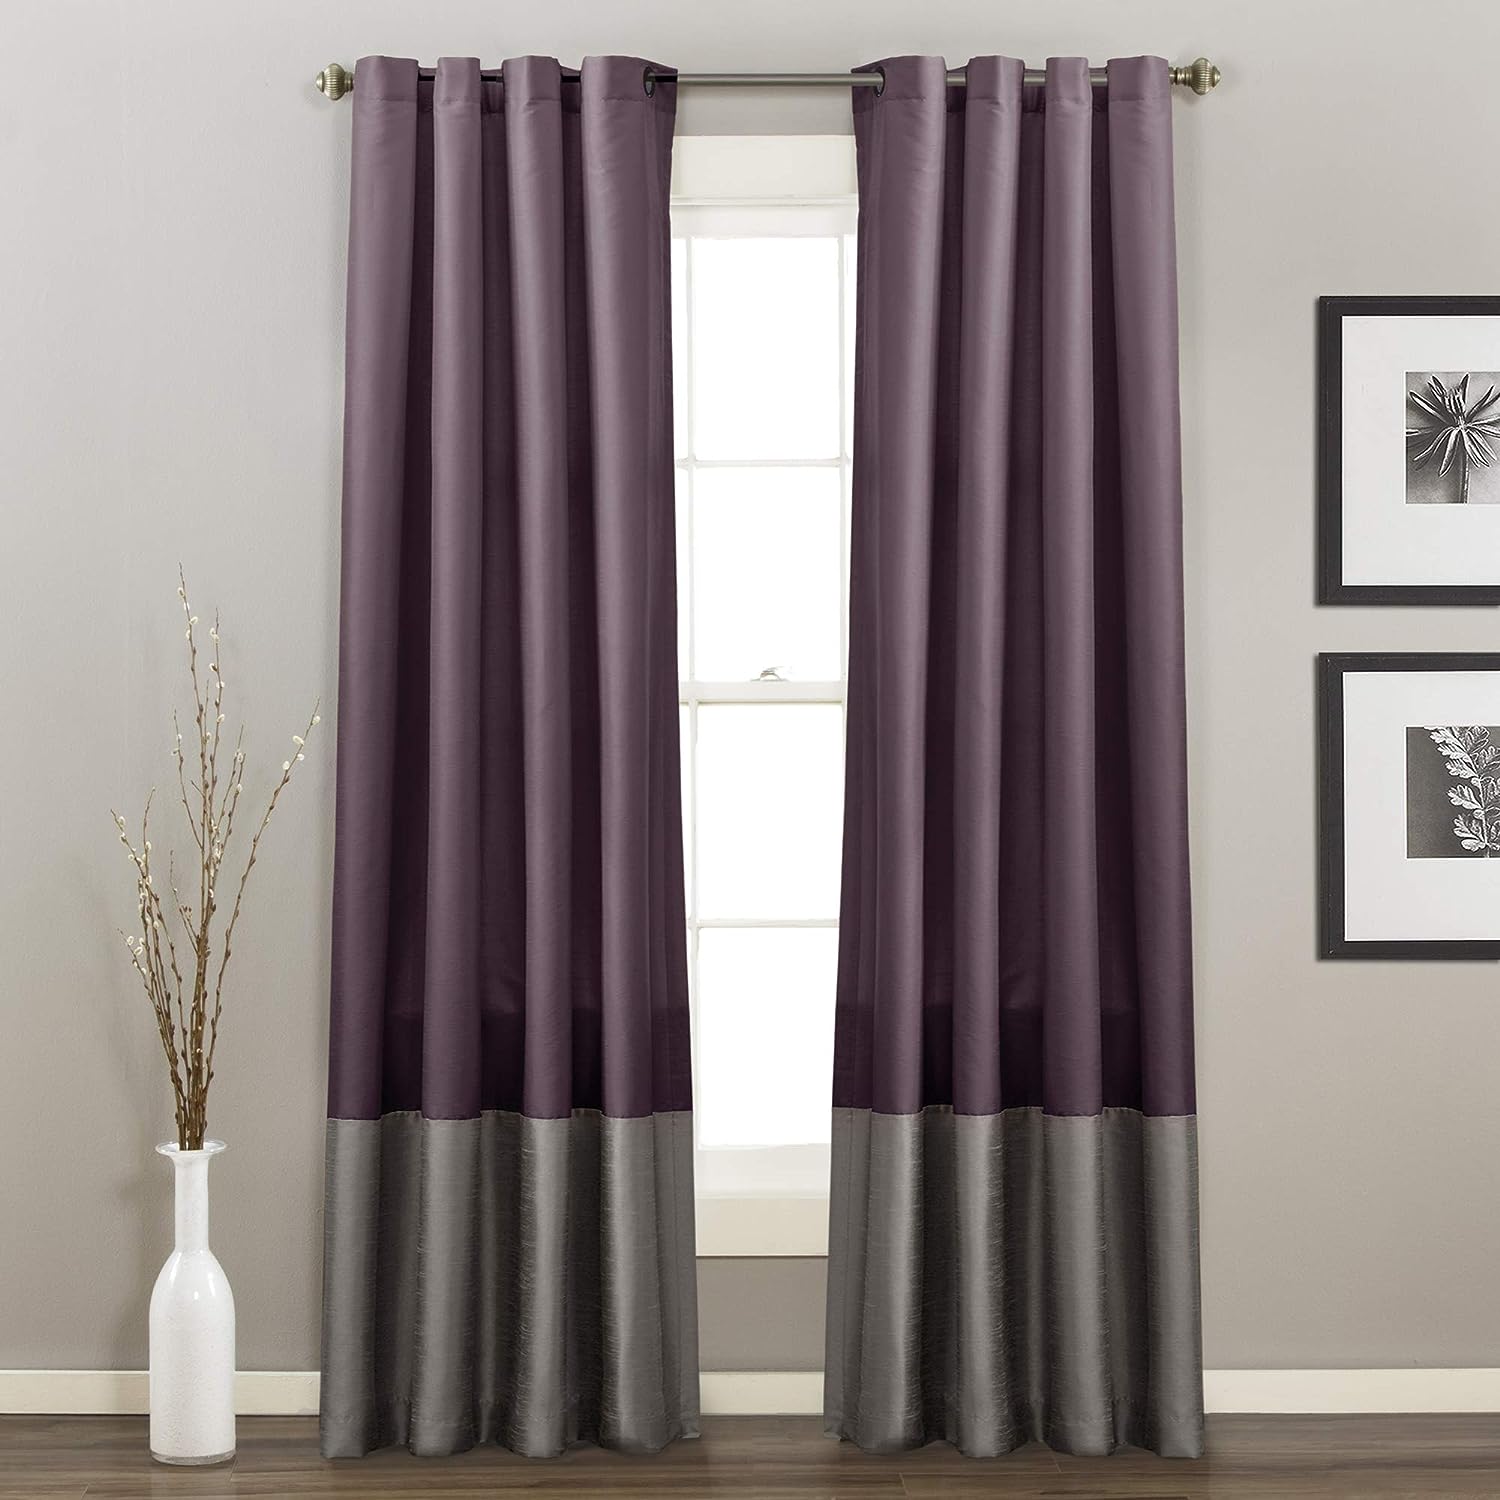 Lush Decor White Prima Window Curtains (Pair, 54"W x 84"L, Purple & Gray) $7 + Free Shipping w/ Prime or on $35+